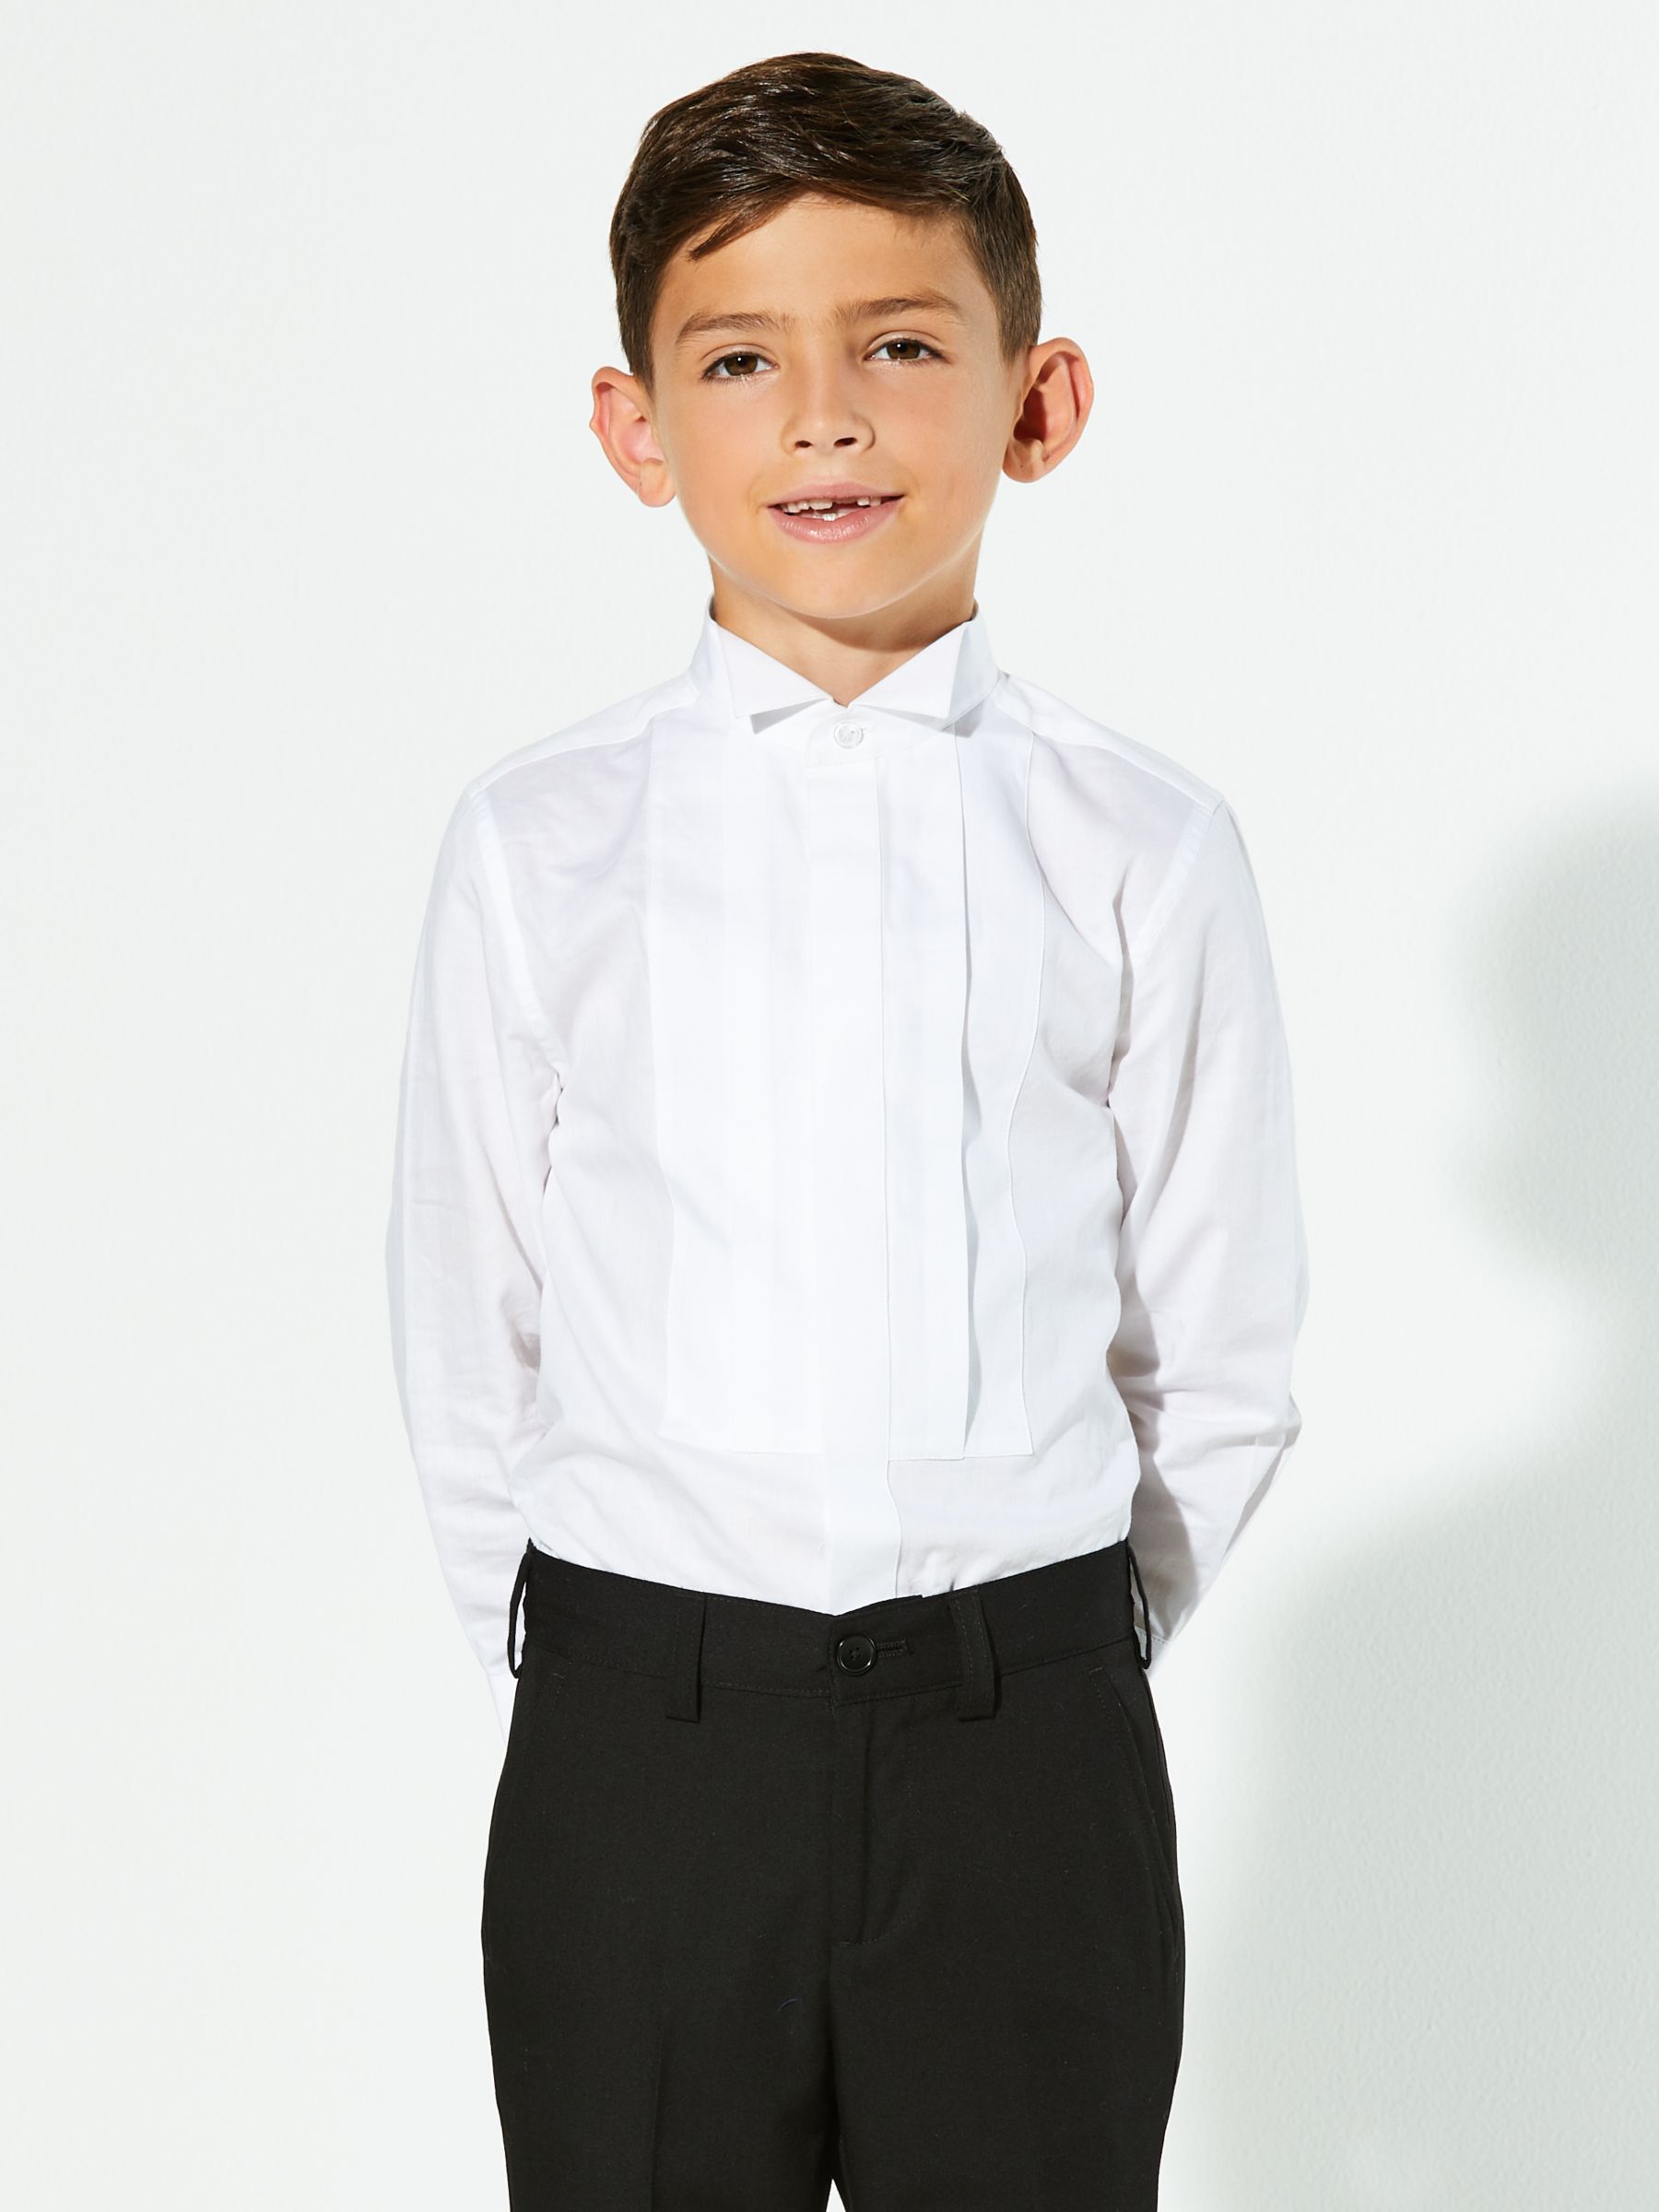 John Lewis Heirloom Collection Boys Waistcoat Bow Tie Shirt Set Black/White Age5